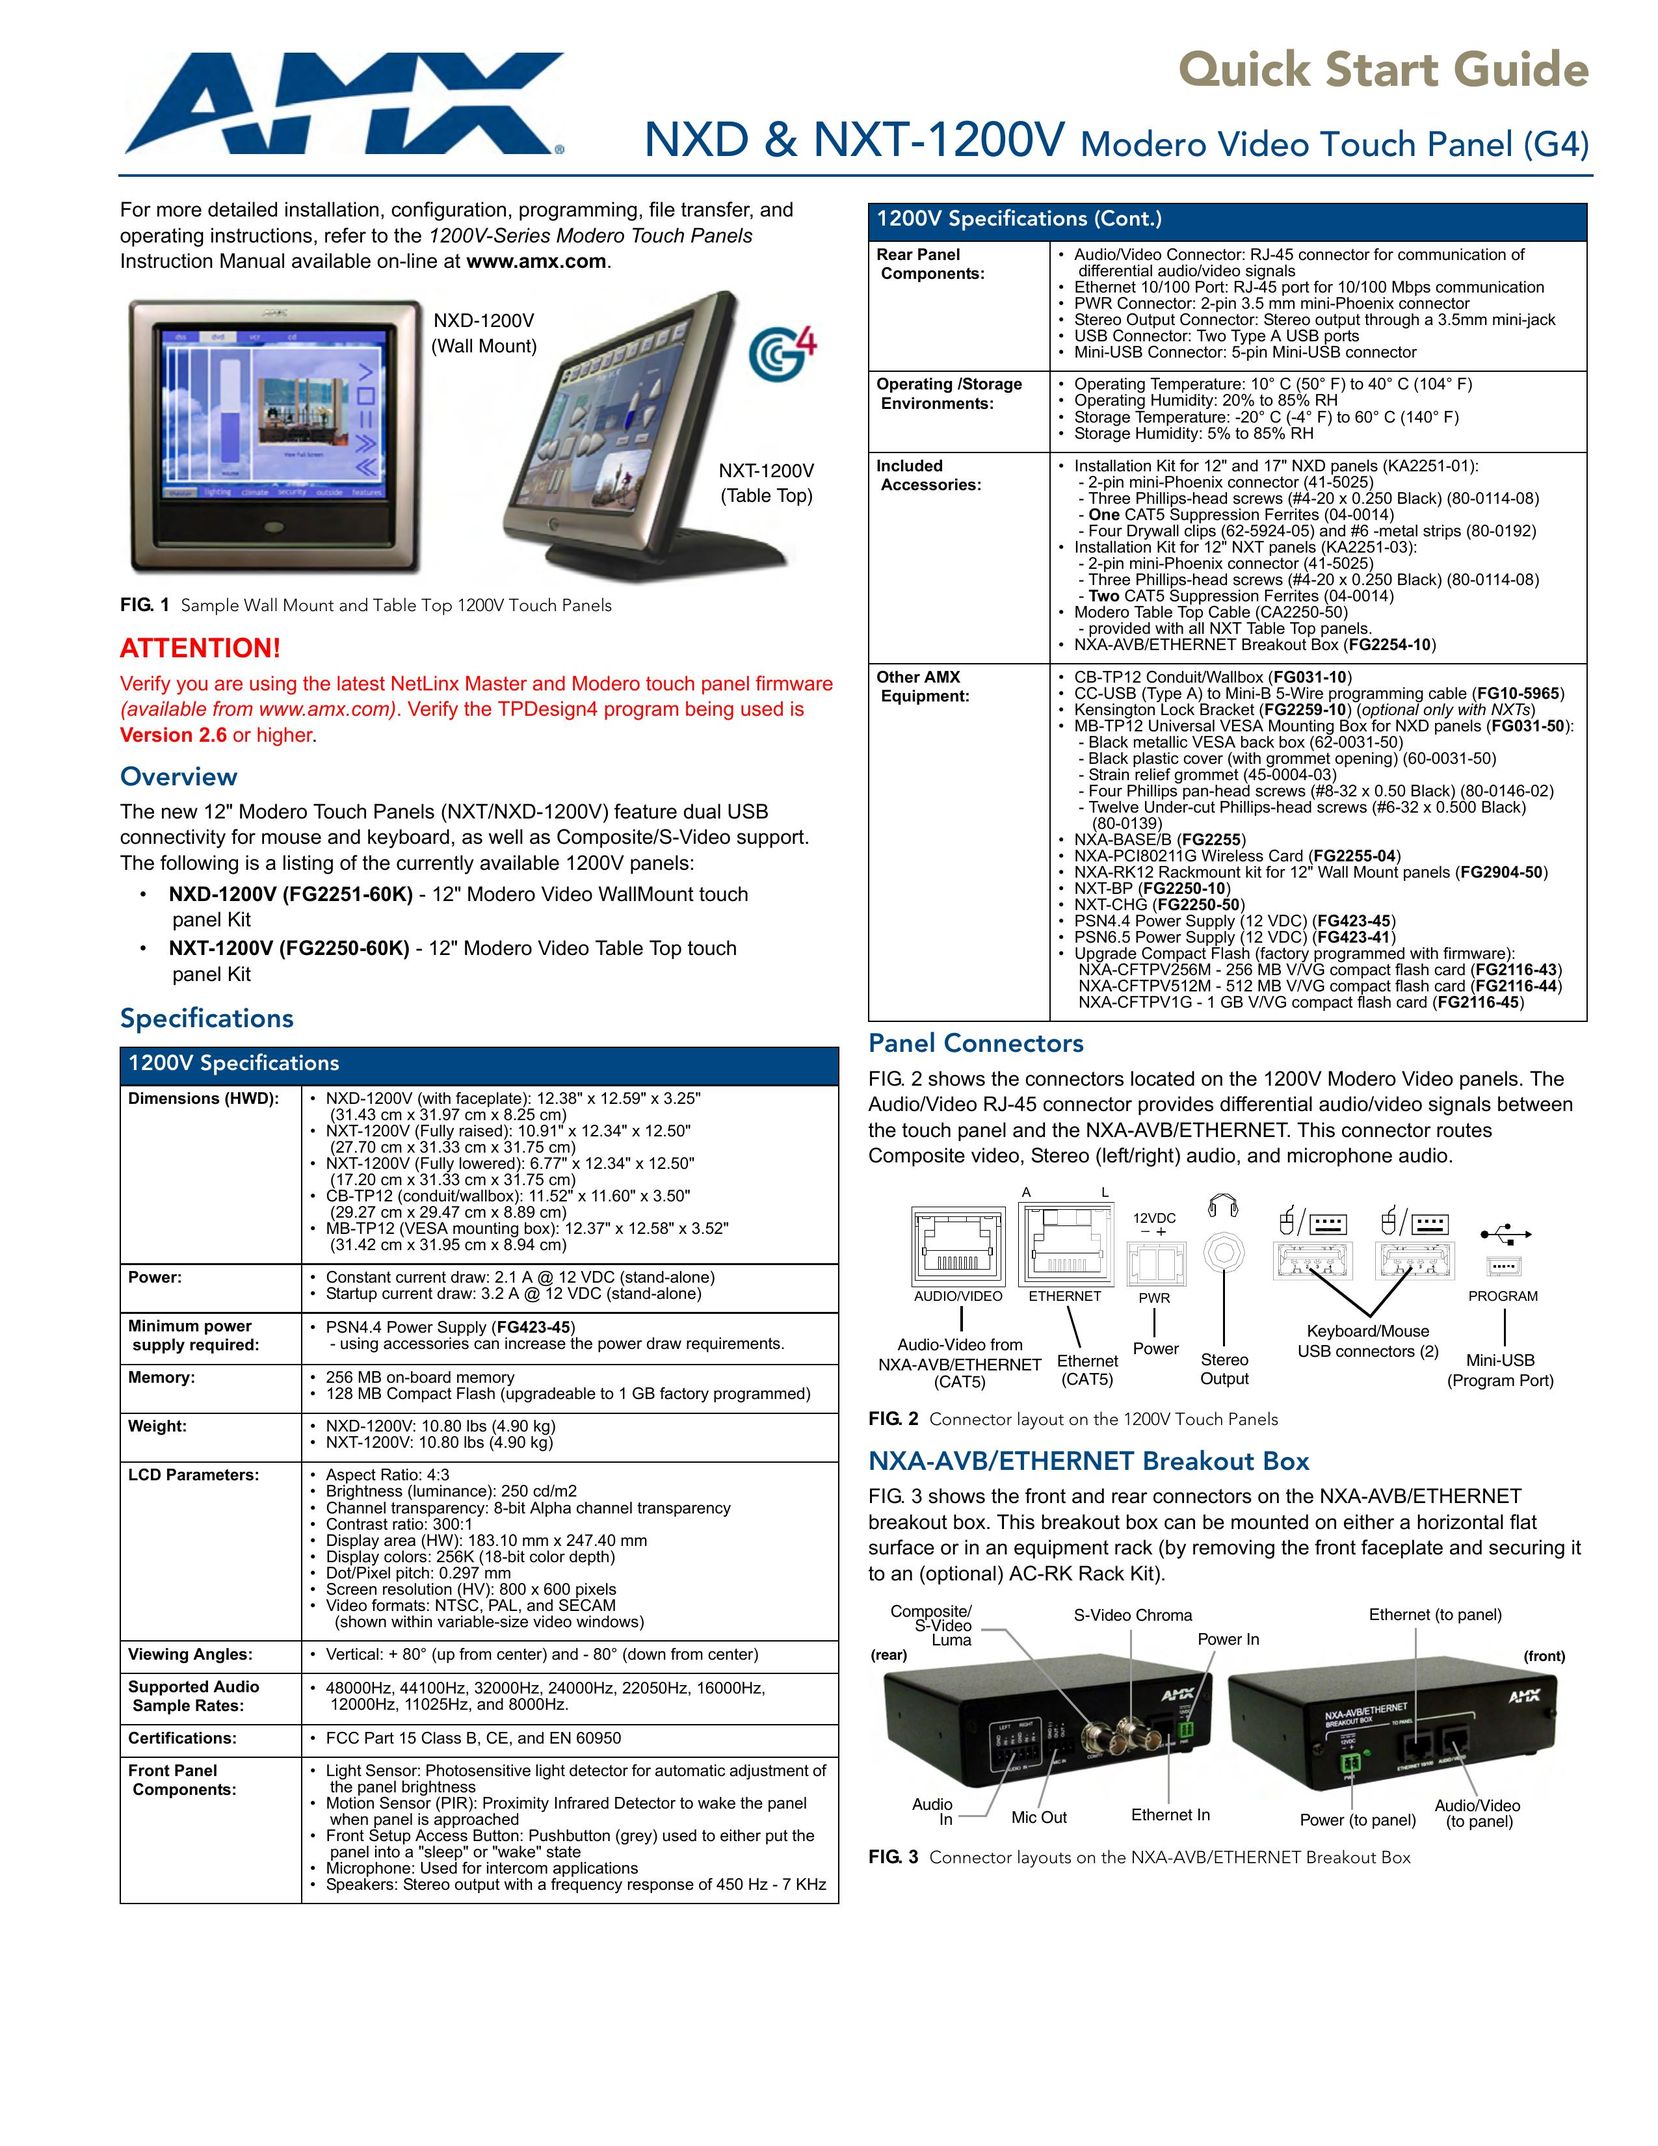 AMX NXT/NXD-1200V Car Video System User Manual